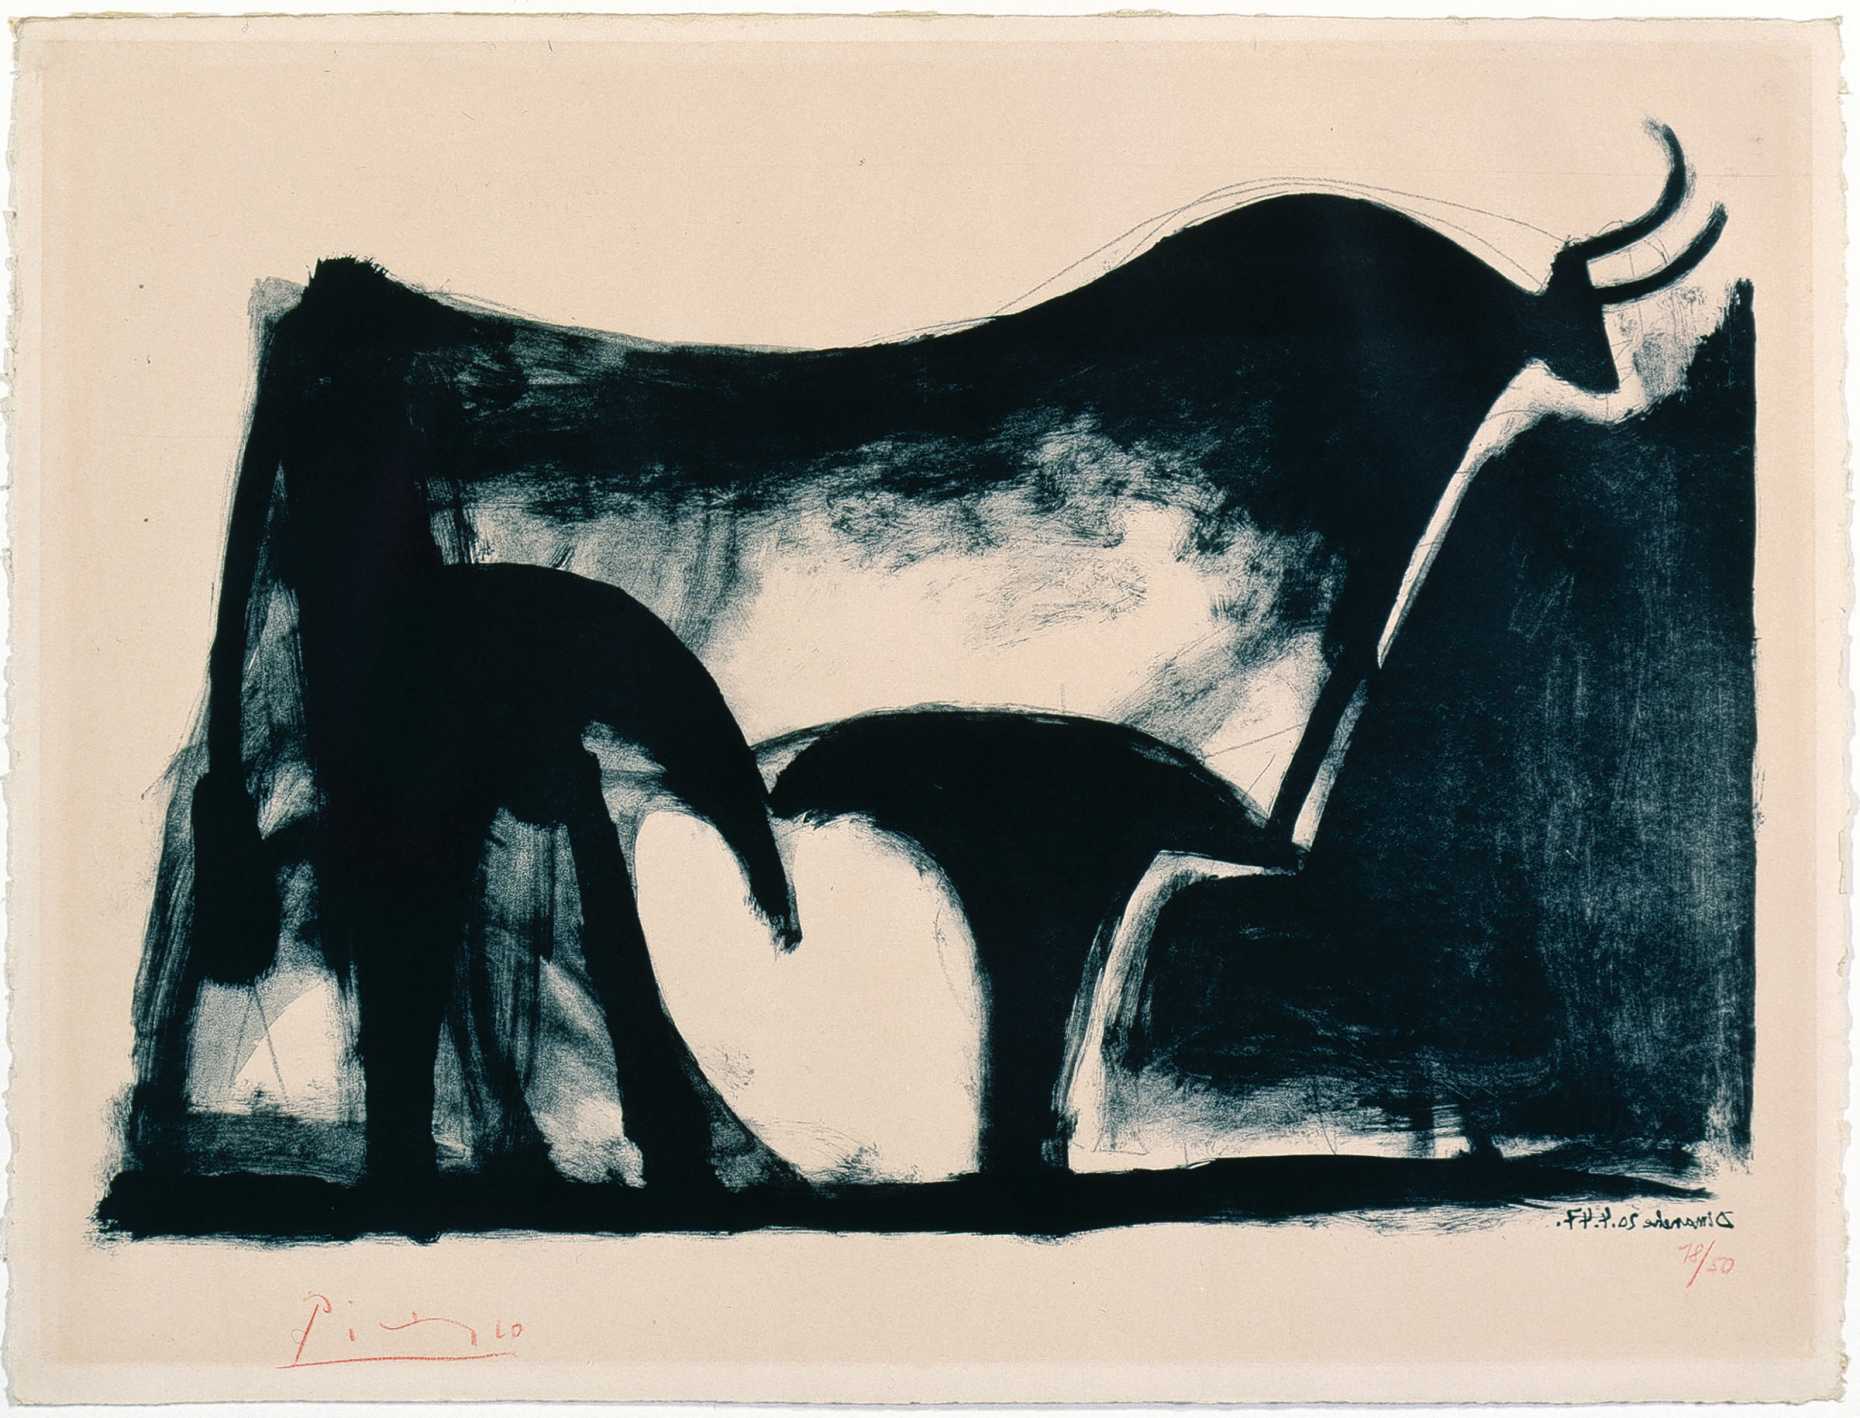 Pablo Picasso, Le taureau noir, 1947 © Graphische Sammlung ETH Zürich / ProLitteris